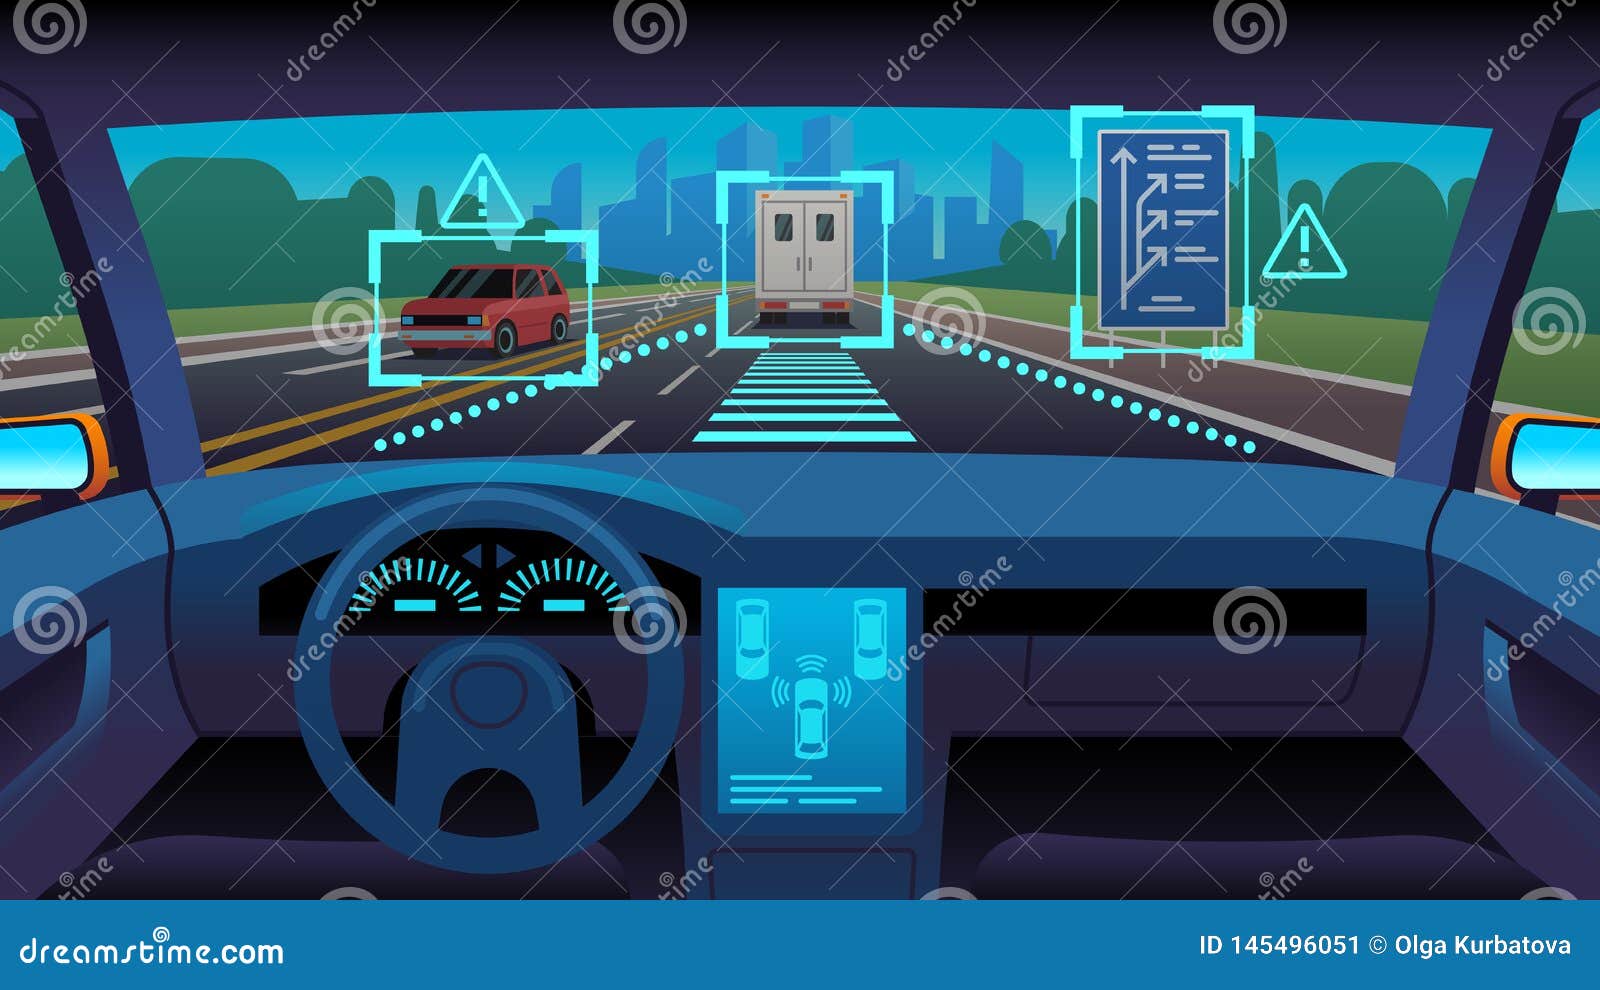 future autonomous vehicle. driverless car interior futuristic autonomous autopilot sensor system gps road, cartoon